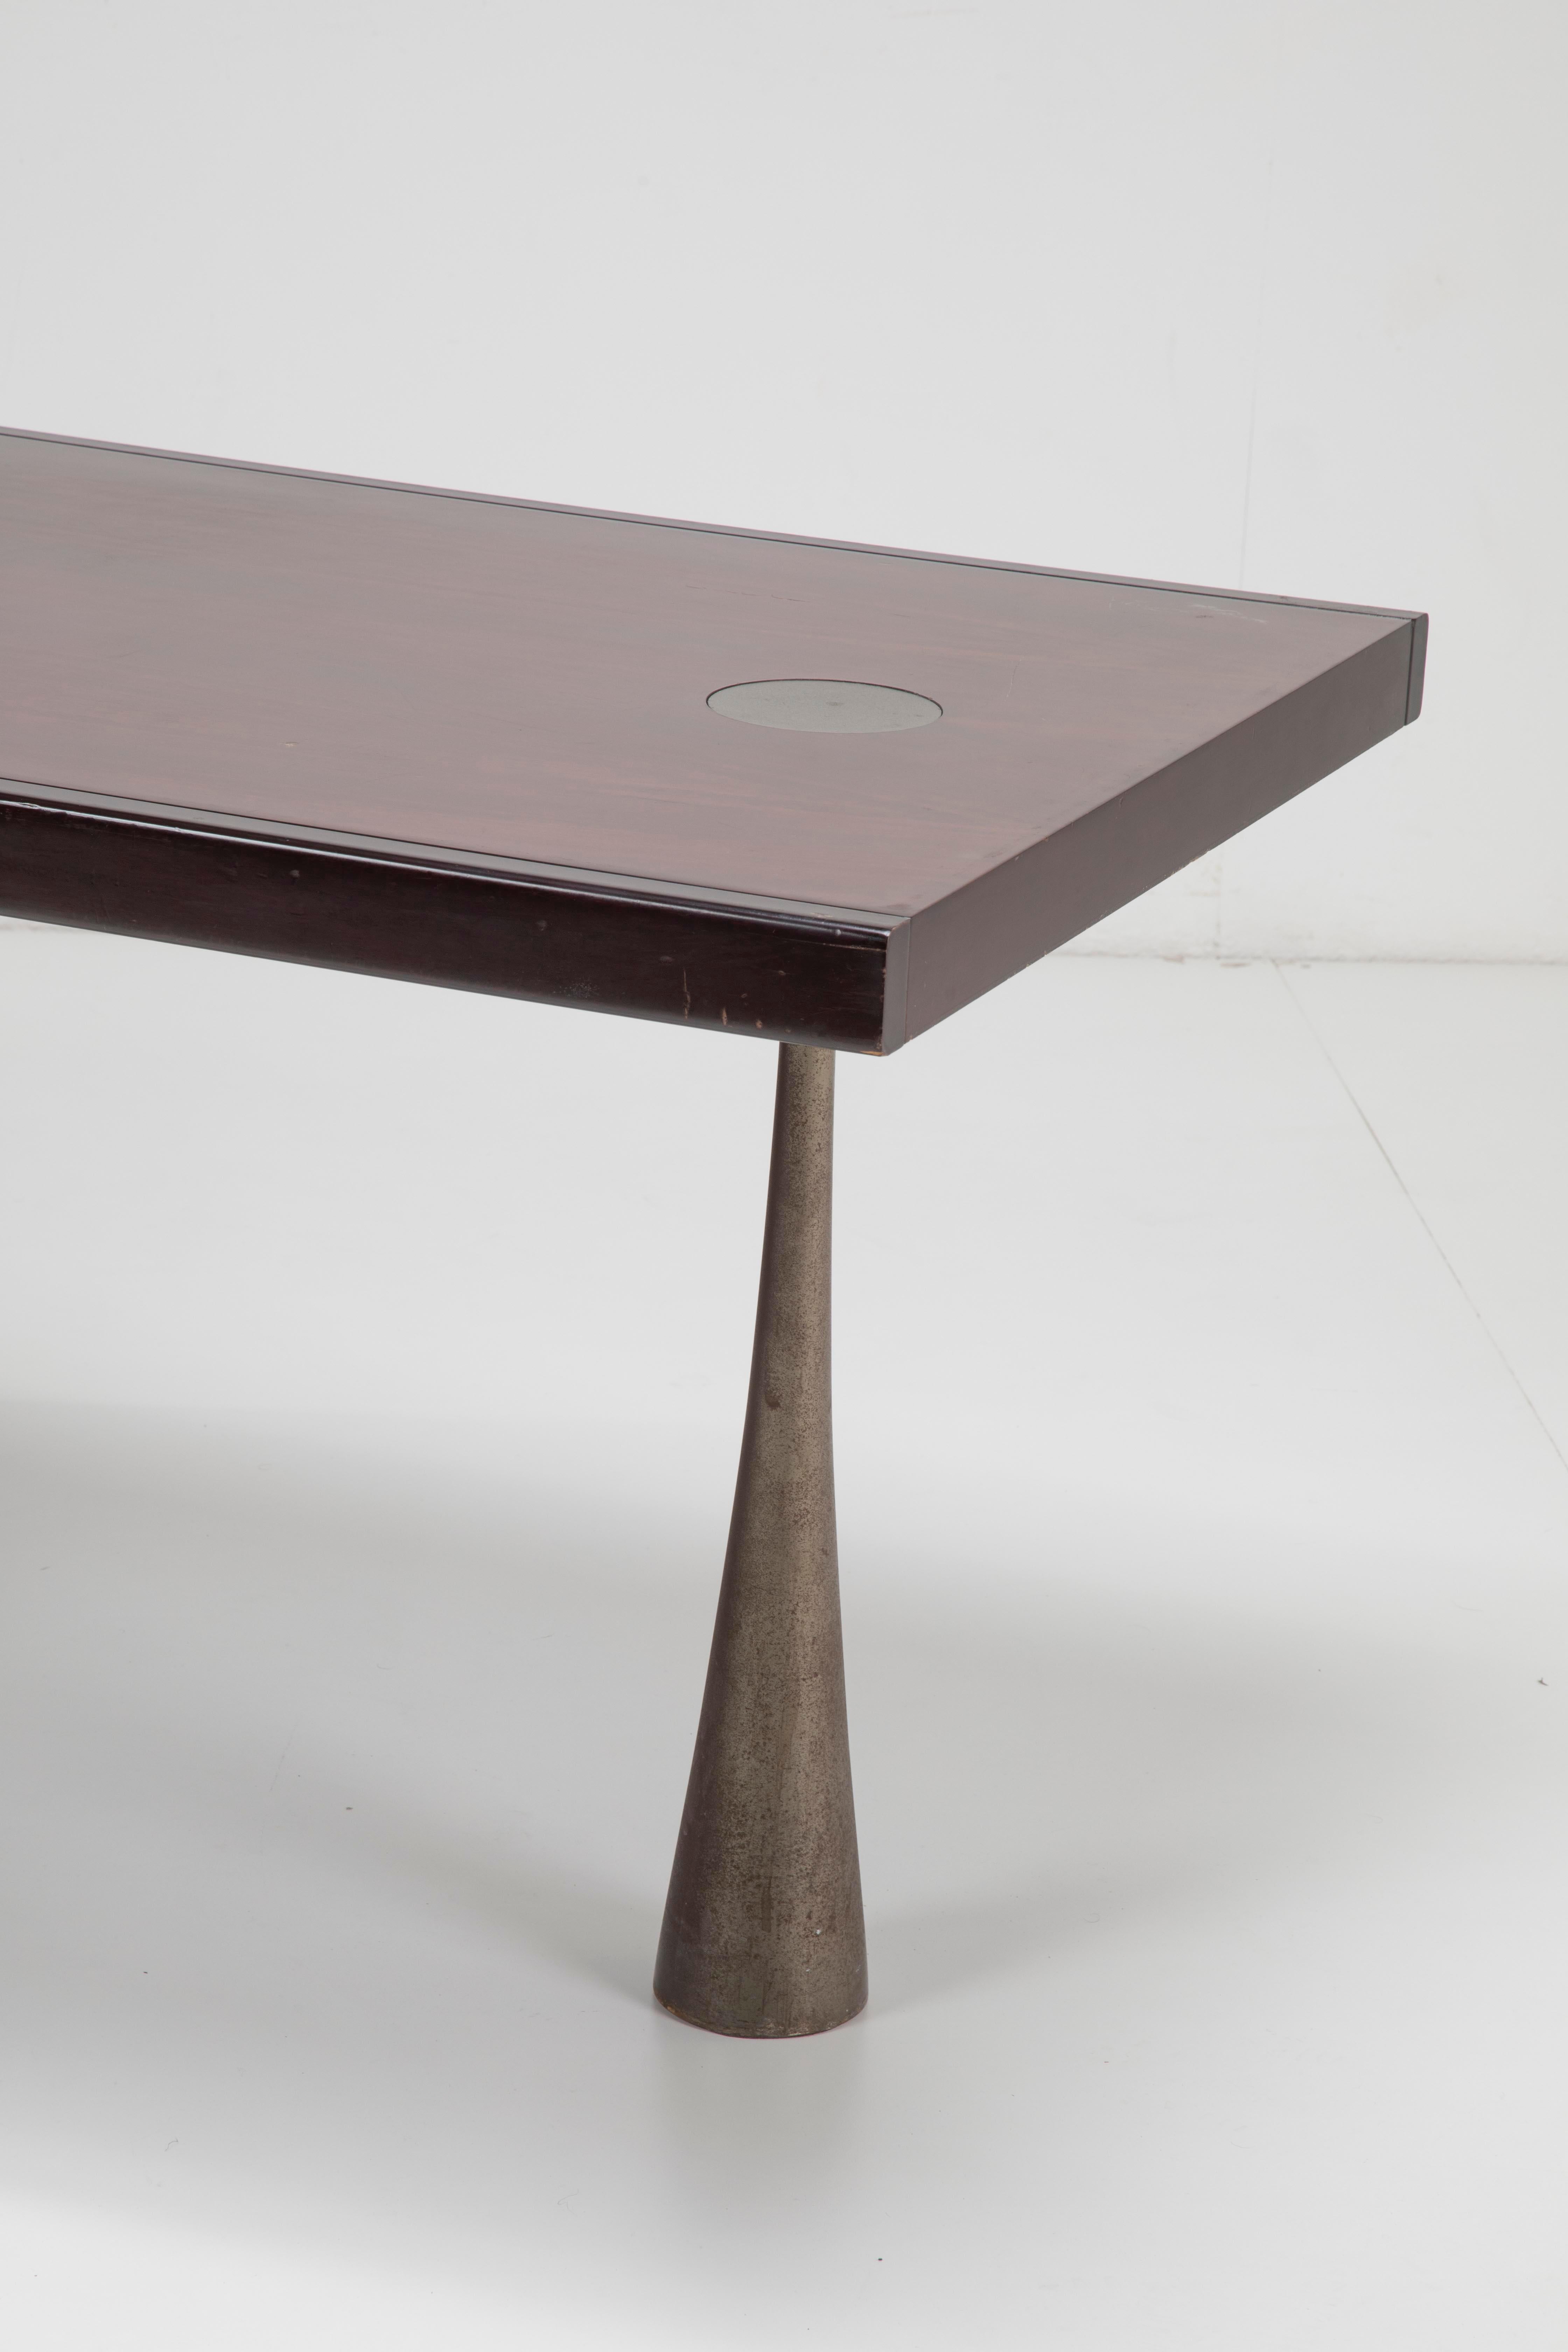 Late 20th Century Angelo Mangiarotti Rare desk with single cast iron foot - Italian Design 1970s For Sale